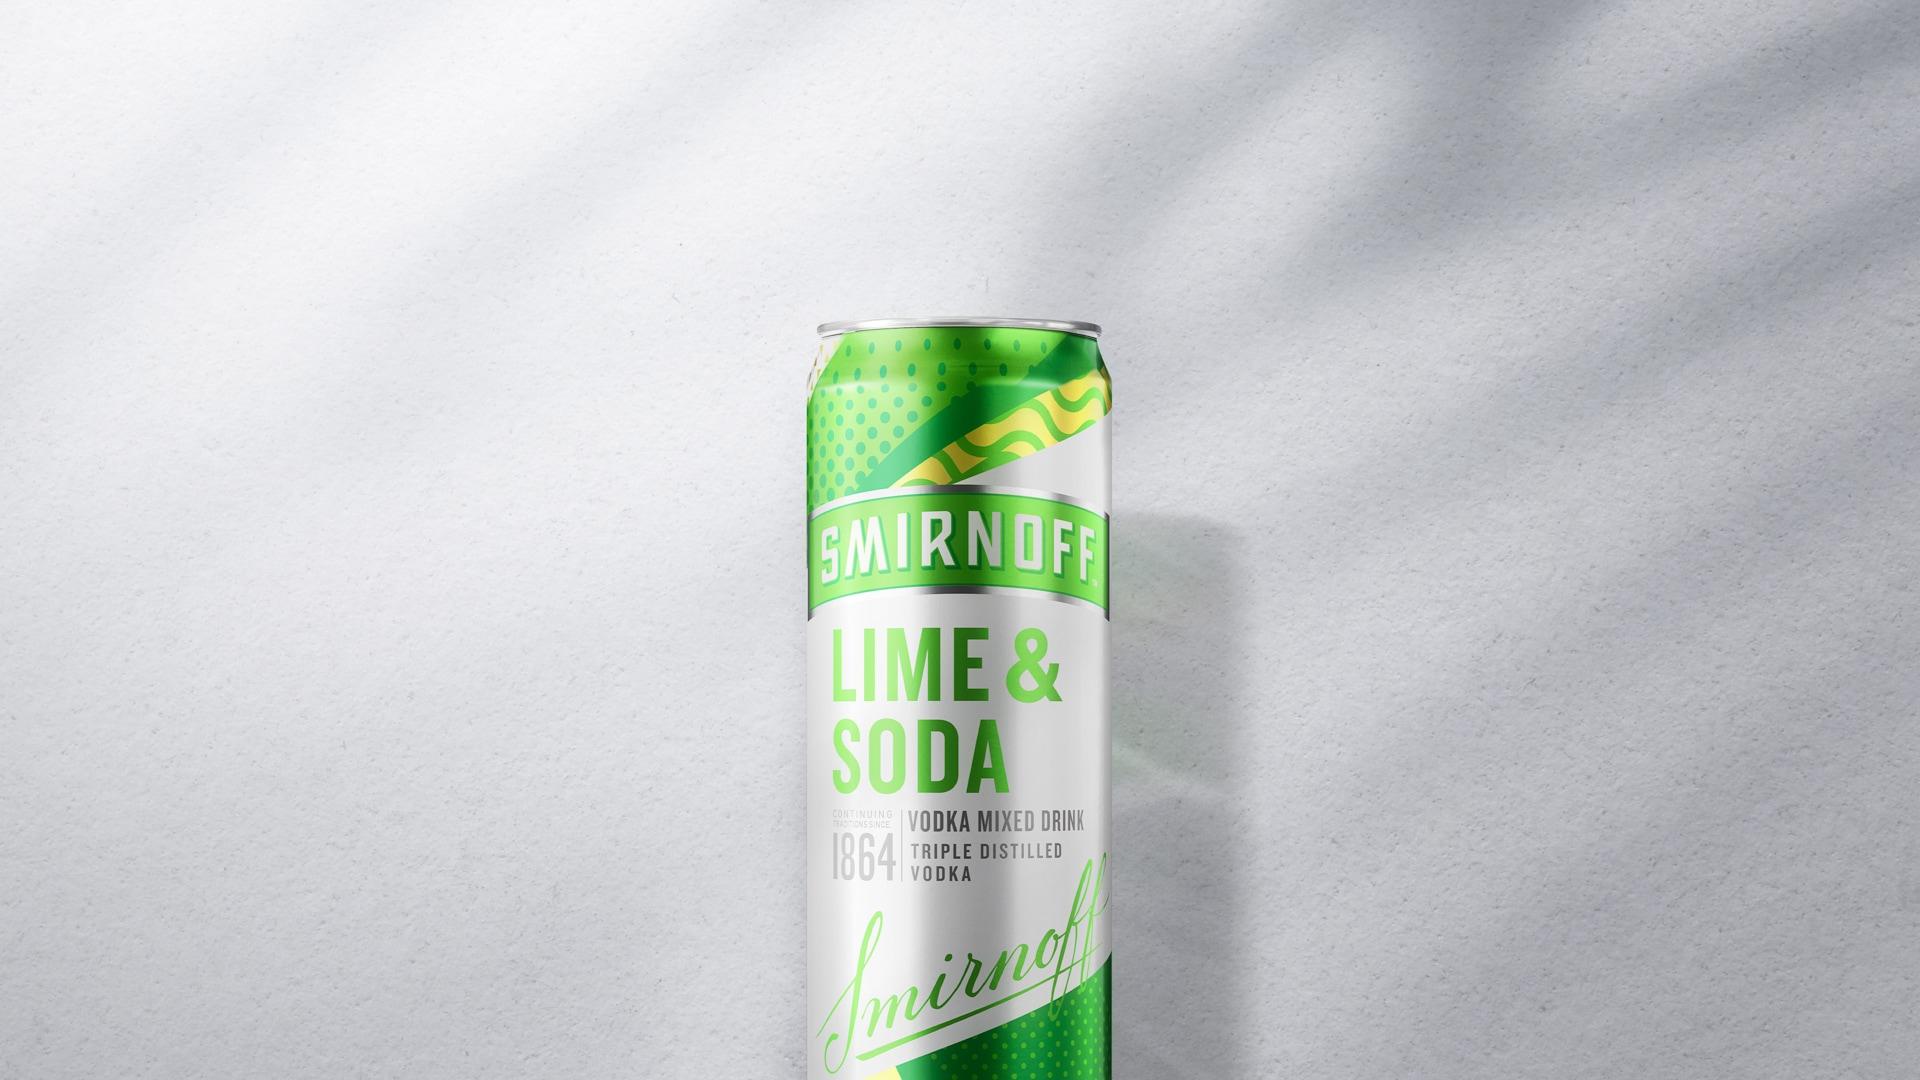 Vodka, Lime, & Soda on a gray background